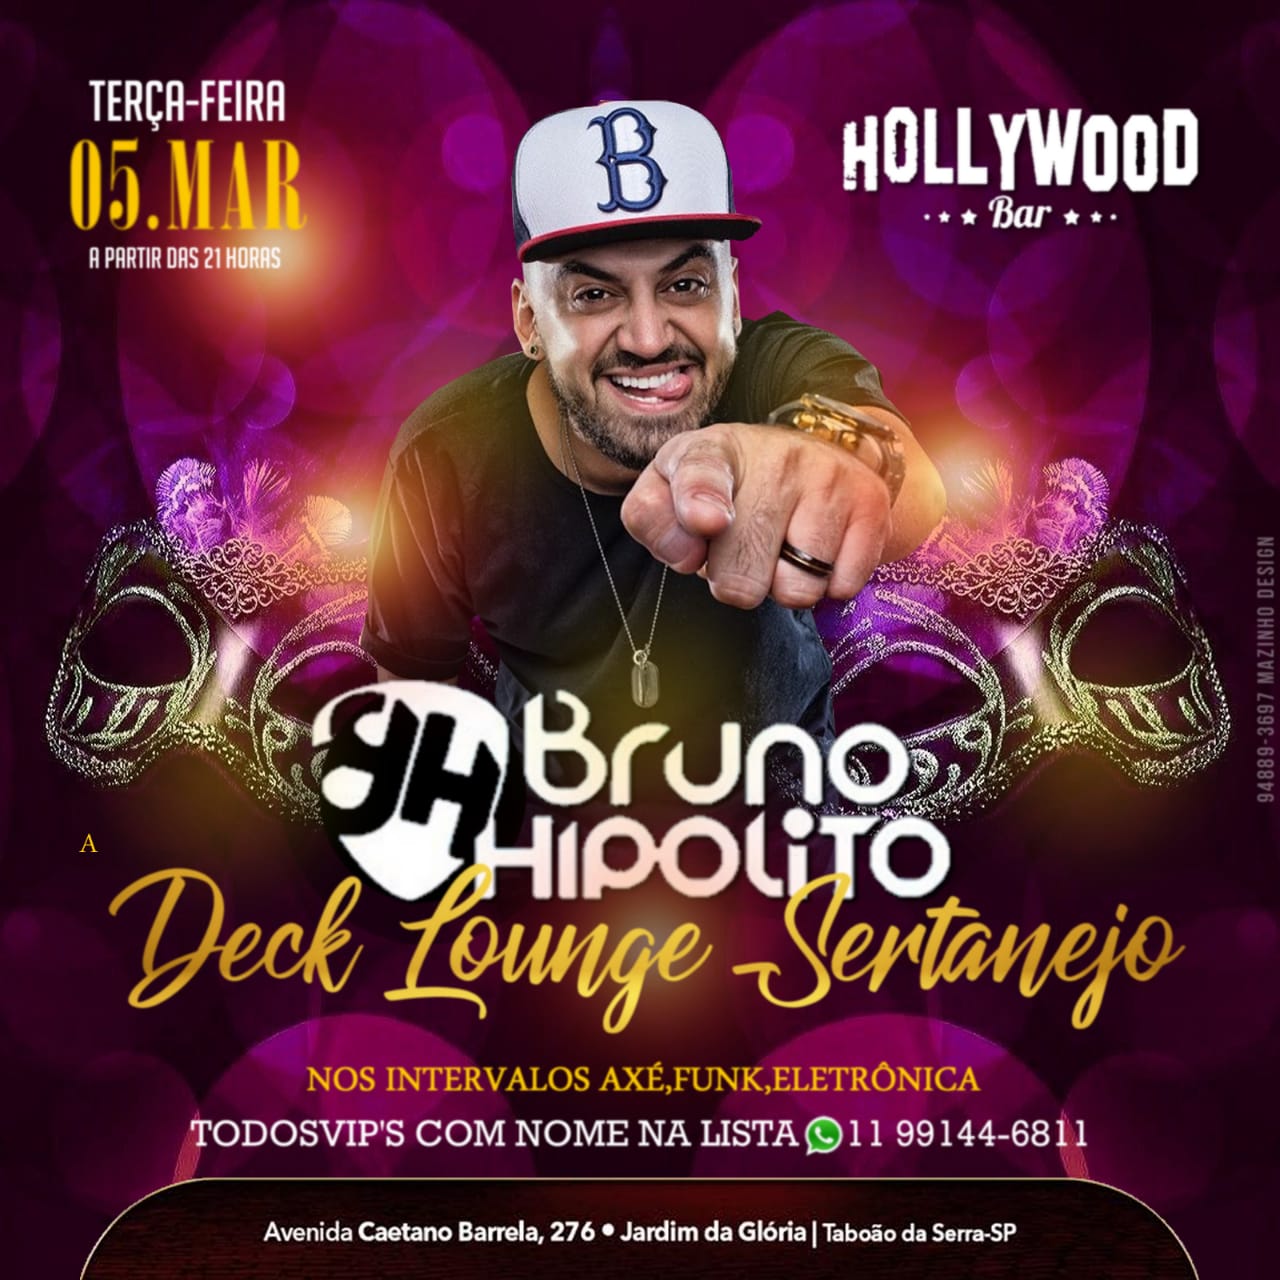 Hollywood Bar: Terça 05/03 | Deck Lounge Sertanejo